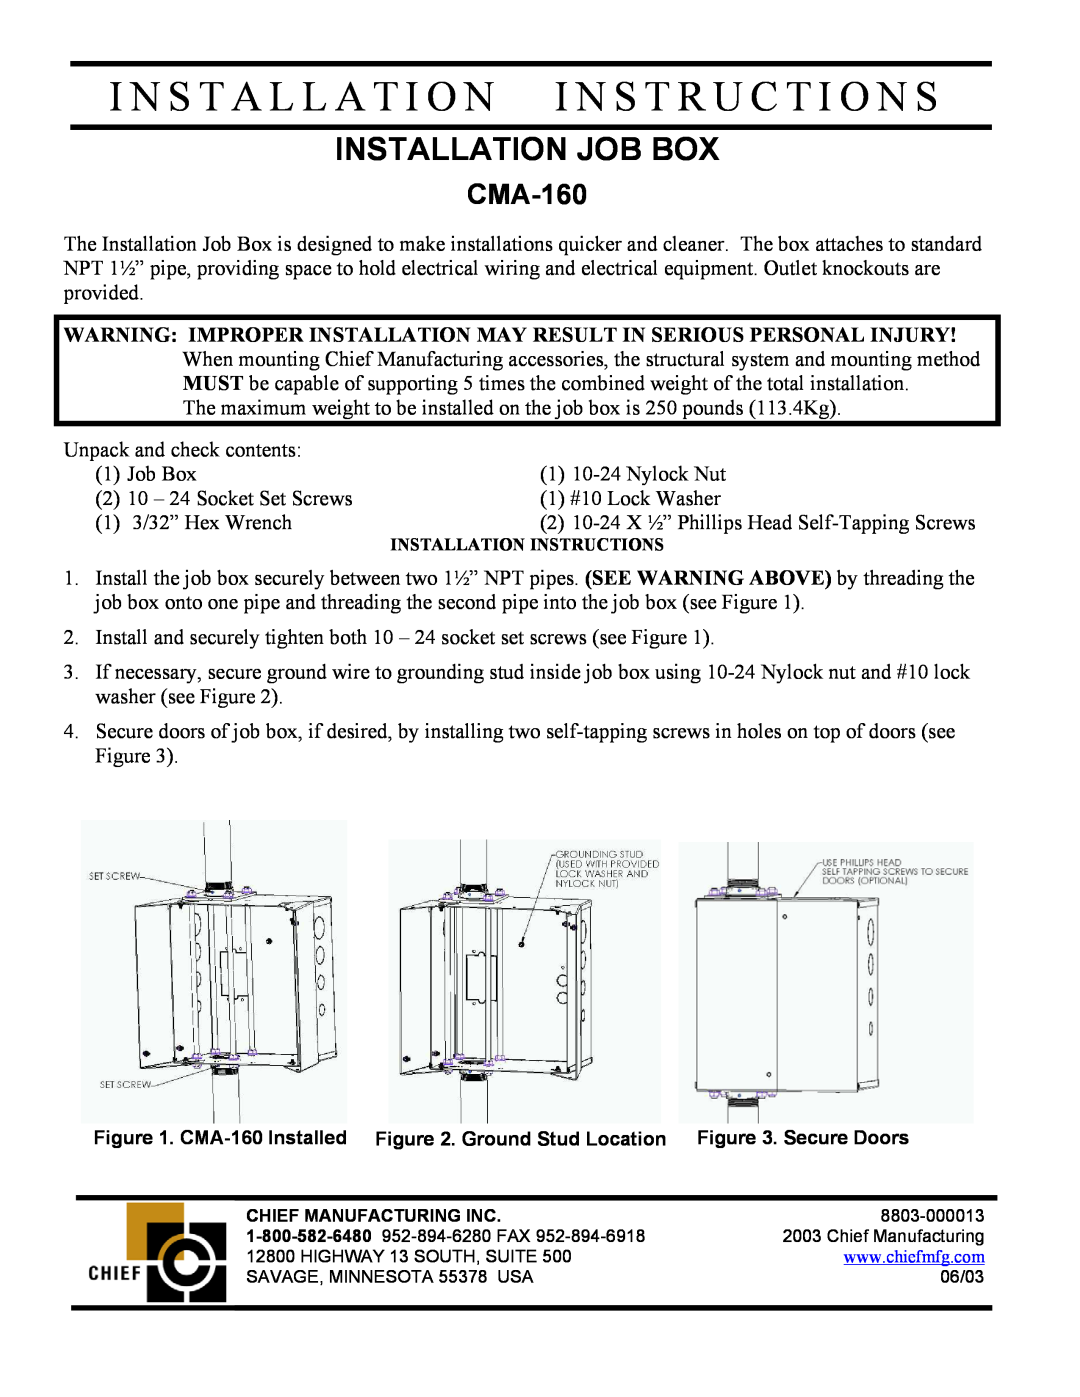 Chief Manufacturing CMA-160 installation instructions I N S T A L L A T I O N I N S T R U C T I O N S 